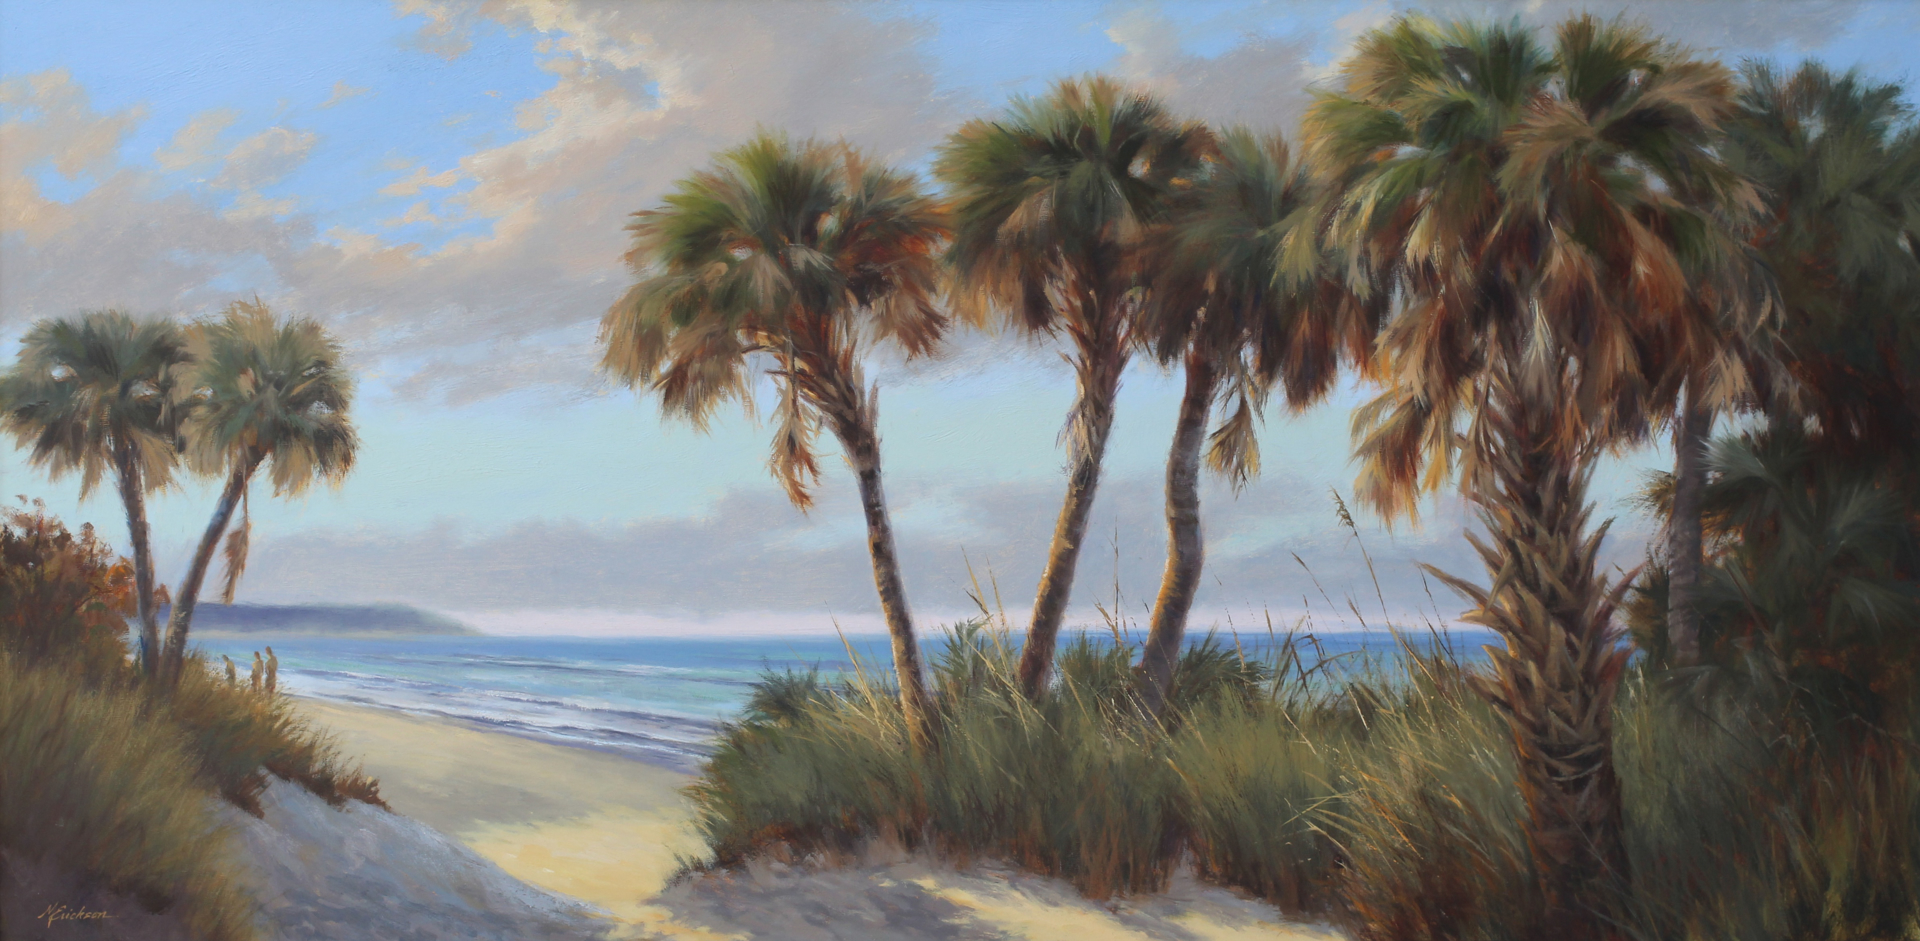 Through the Palms by Mary Erickson